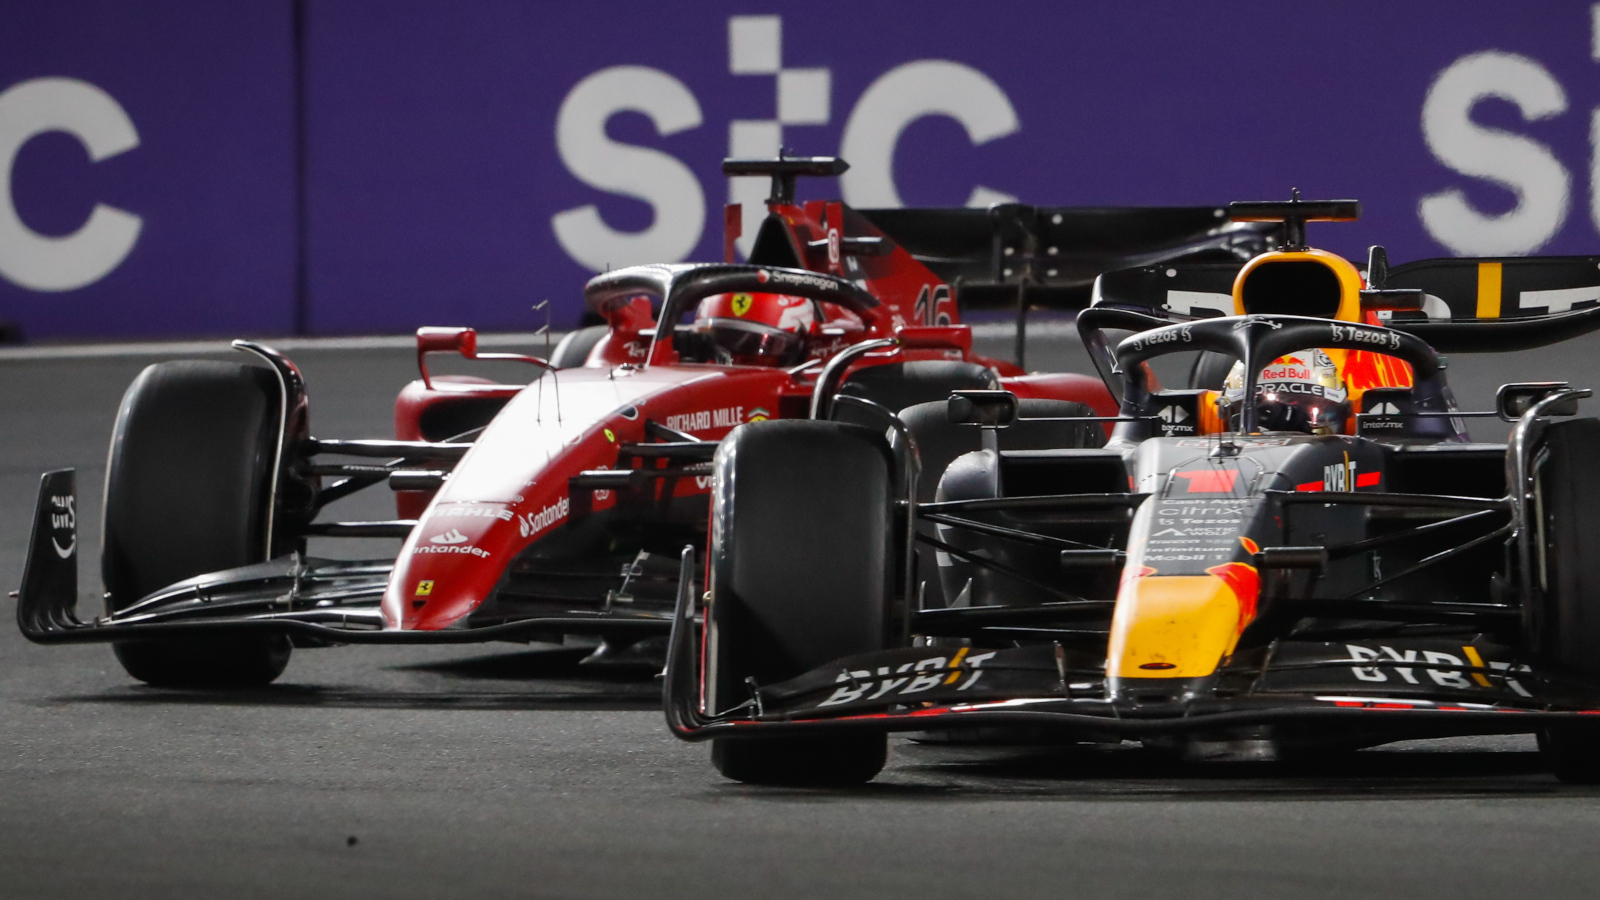 Max Verstappen and Charles Leclerc racing. Saudi Arabia March 2022